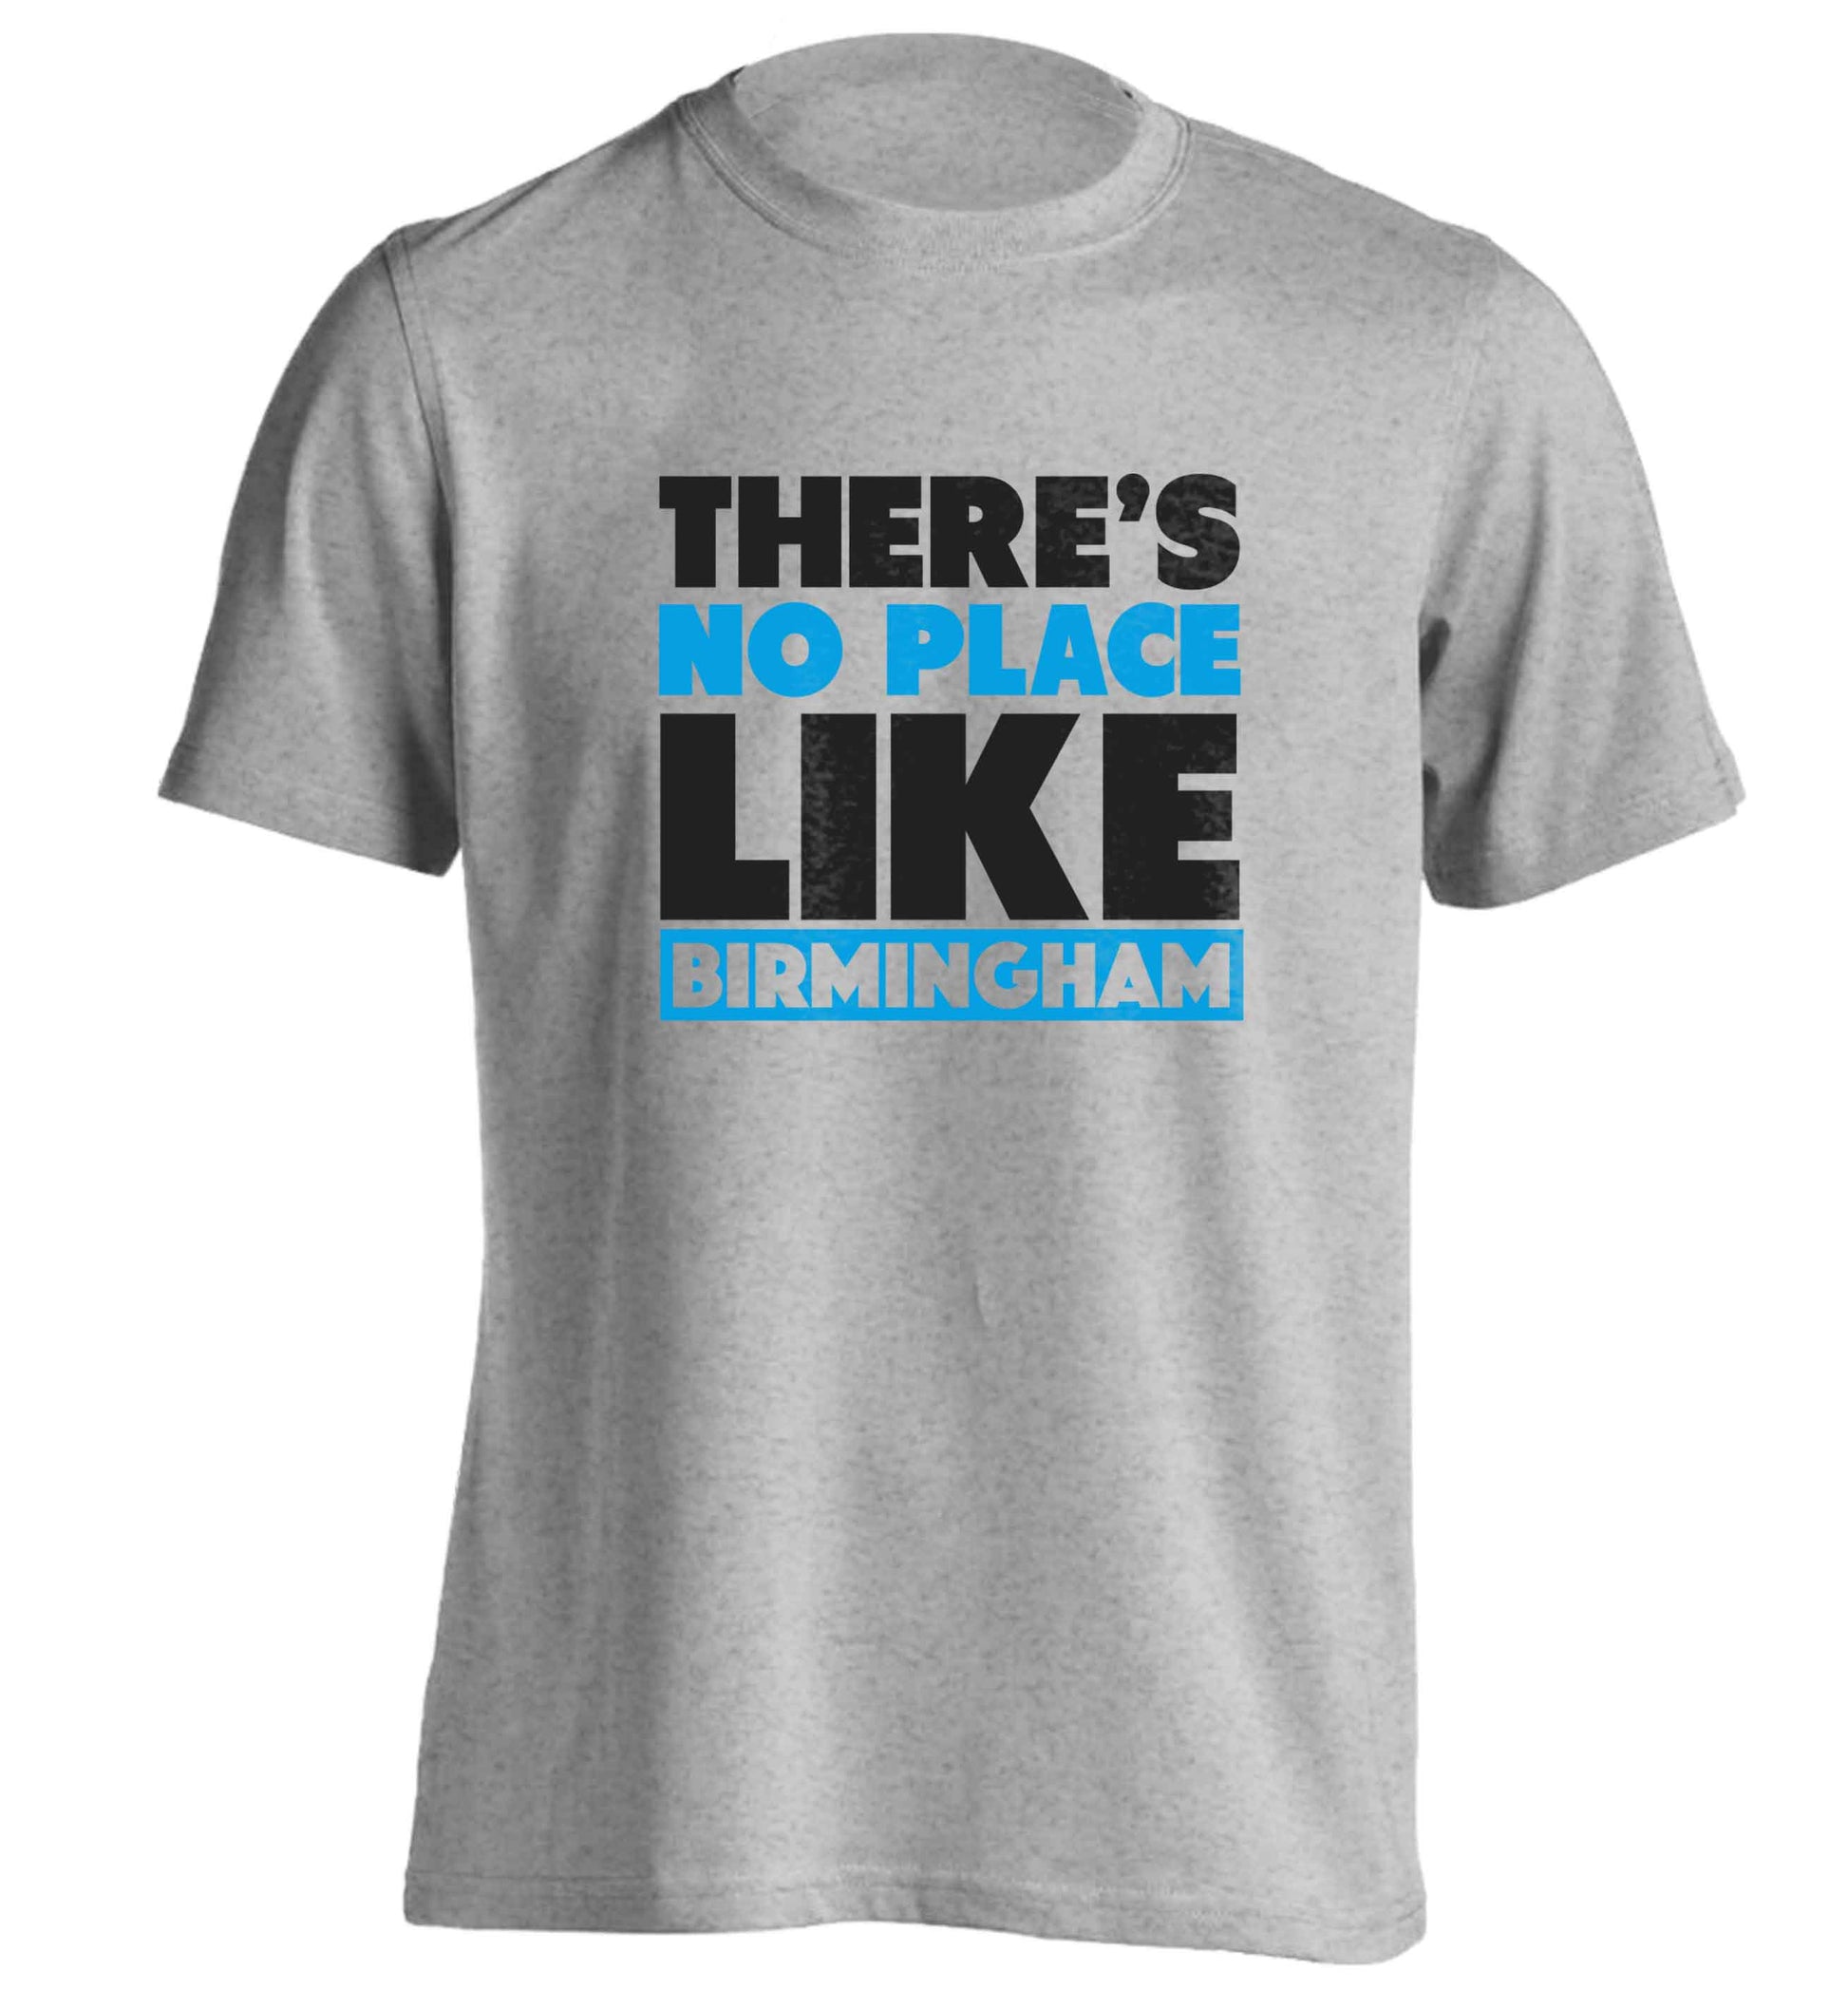 There's no place like Birmingham adults unisex grey Tshirt 2XL